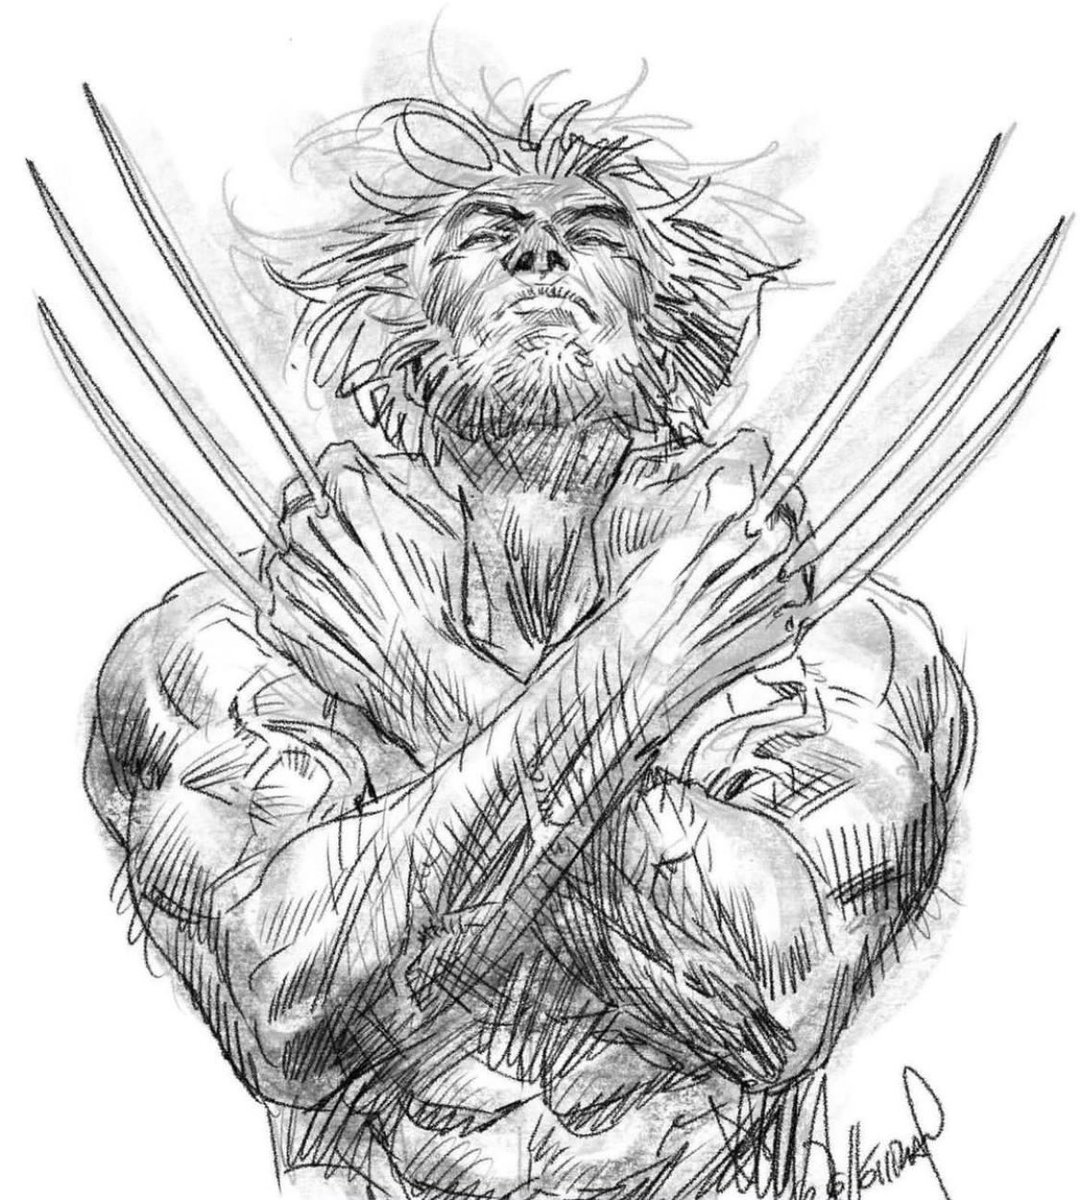 RT @WolverSteve: #Wolverine #WolverineWednesday #WillConradArt #blacknwhite https://t.co/r3rNQouNWe